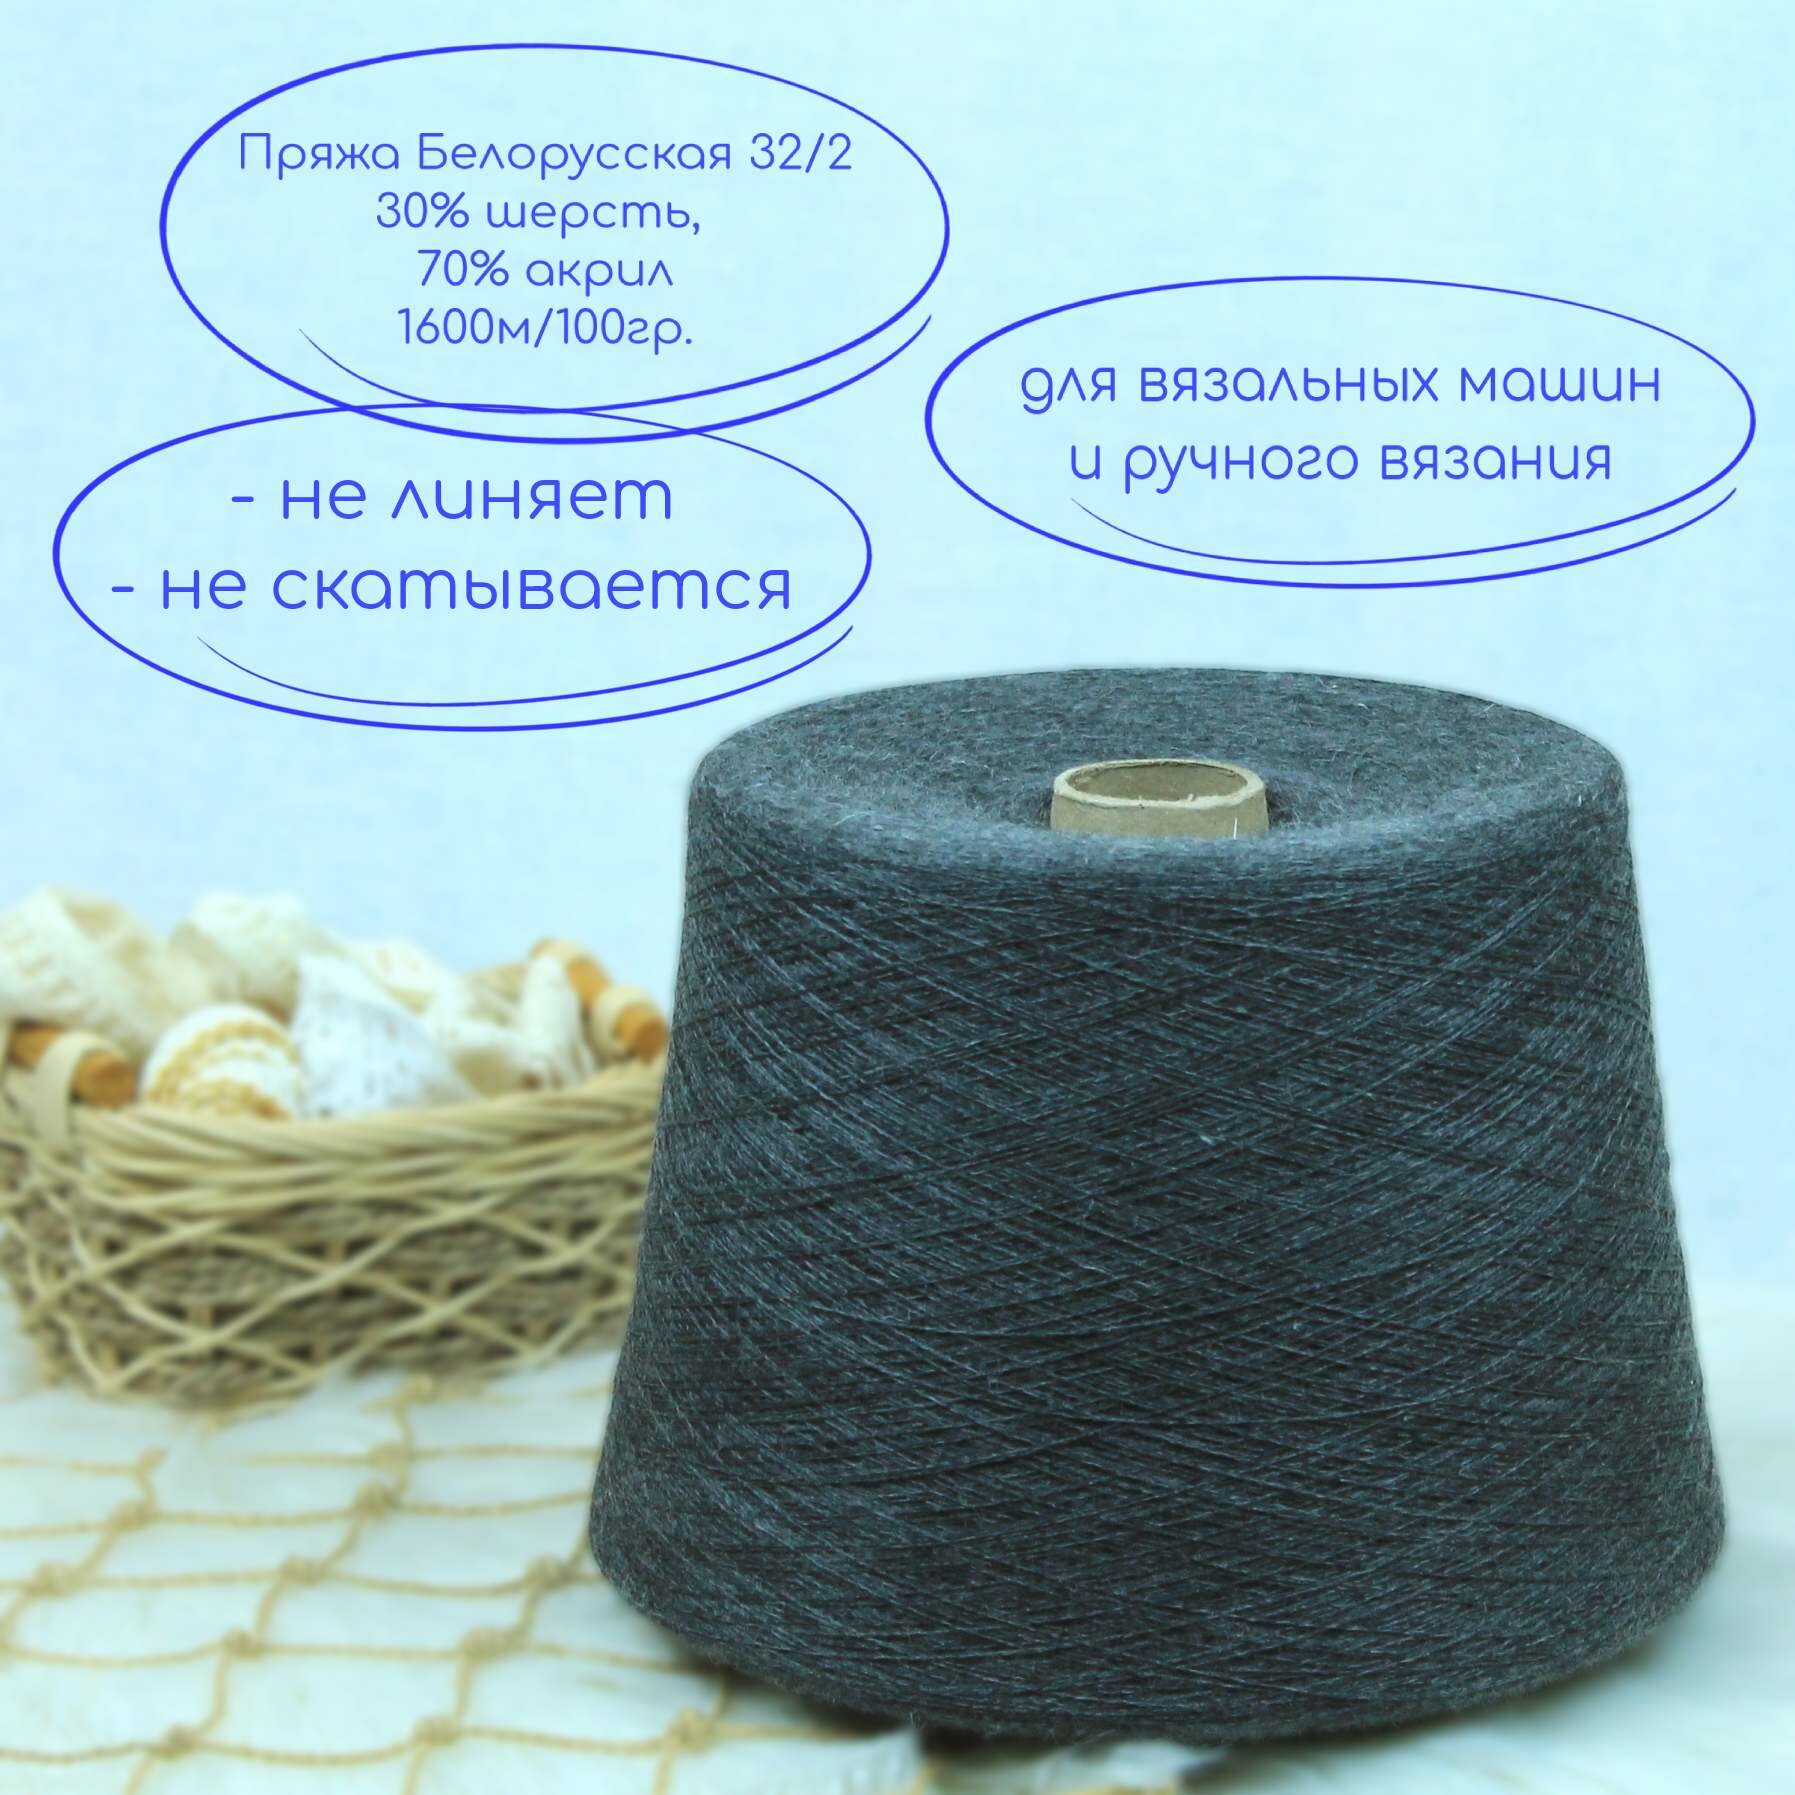 Белорусская пряжа на бобинах, цвет темно-серый, маренго меланж, вес 1650г